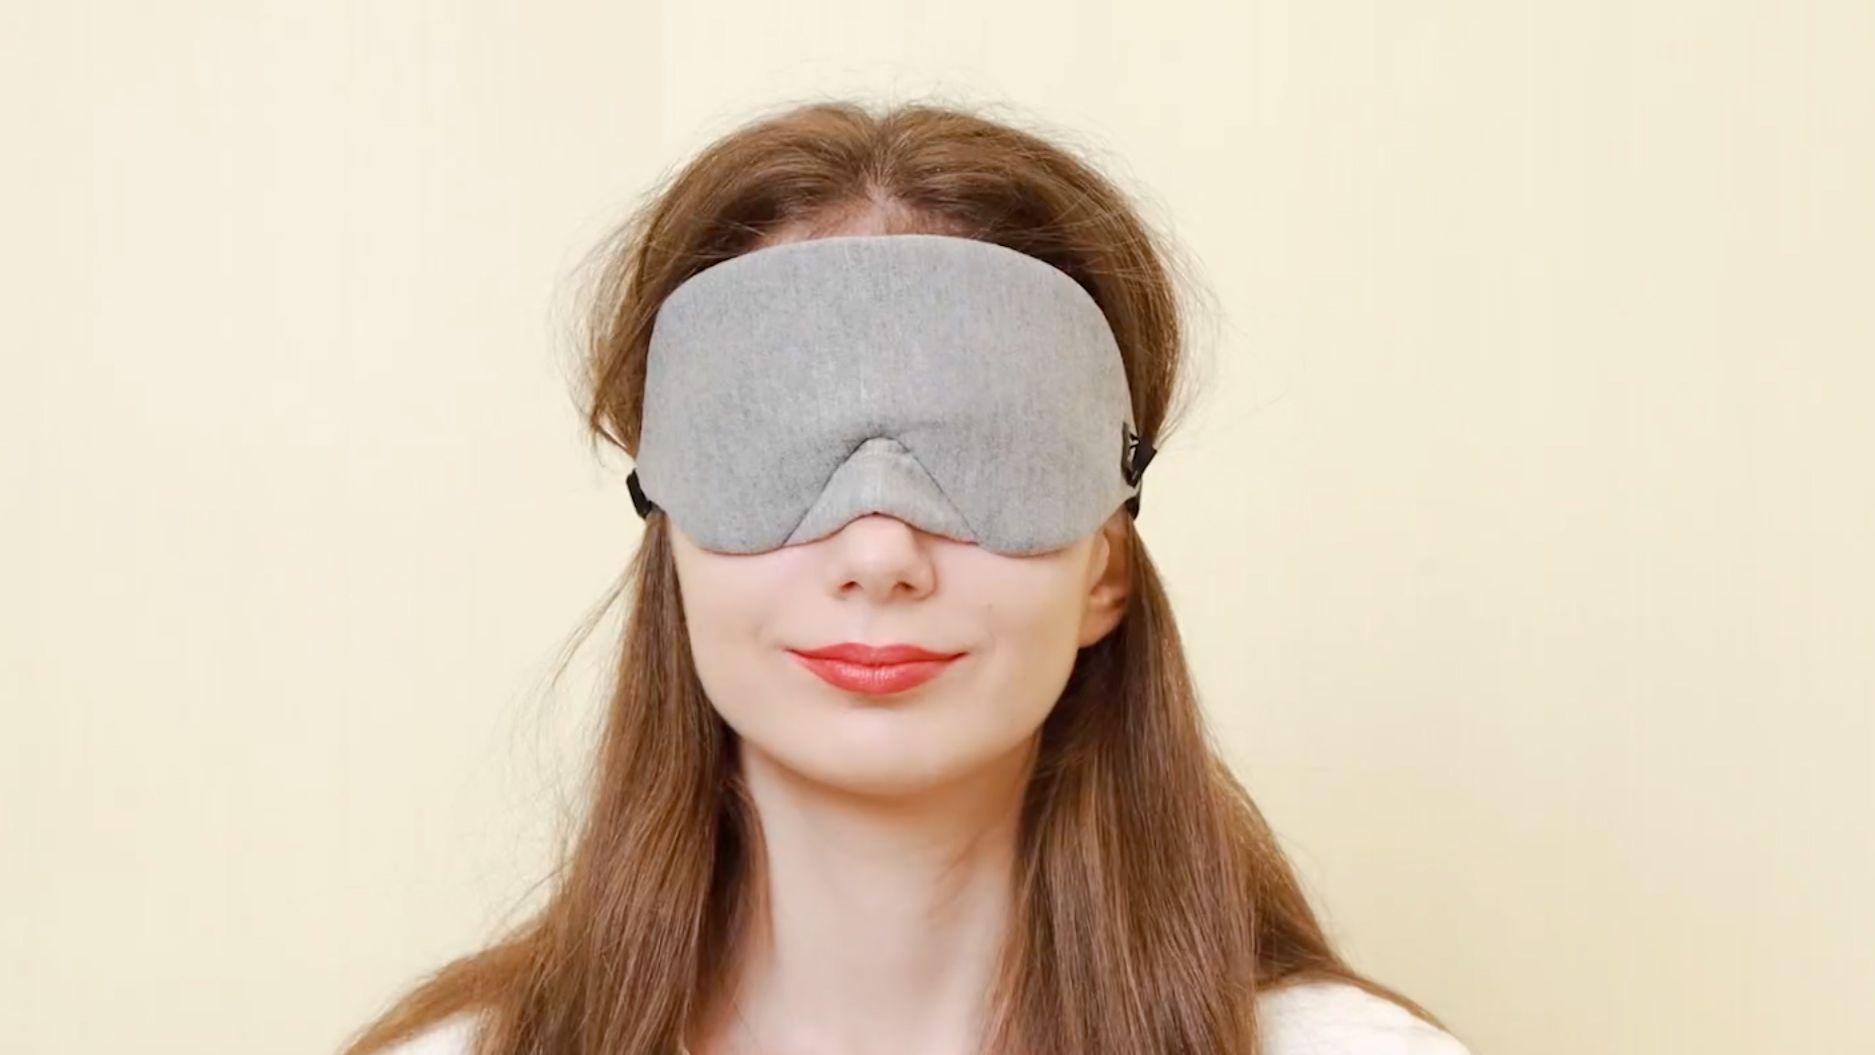  3D Sleep Mask for Side Sleeper, 100% Light Blocking Sleeping  Eye Mask for Women Men, Contoured Cup Night Blindfold, Luxury Eye Cover Eye  Shade with Adjustable Strap for Travel, Nap, Meditation